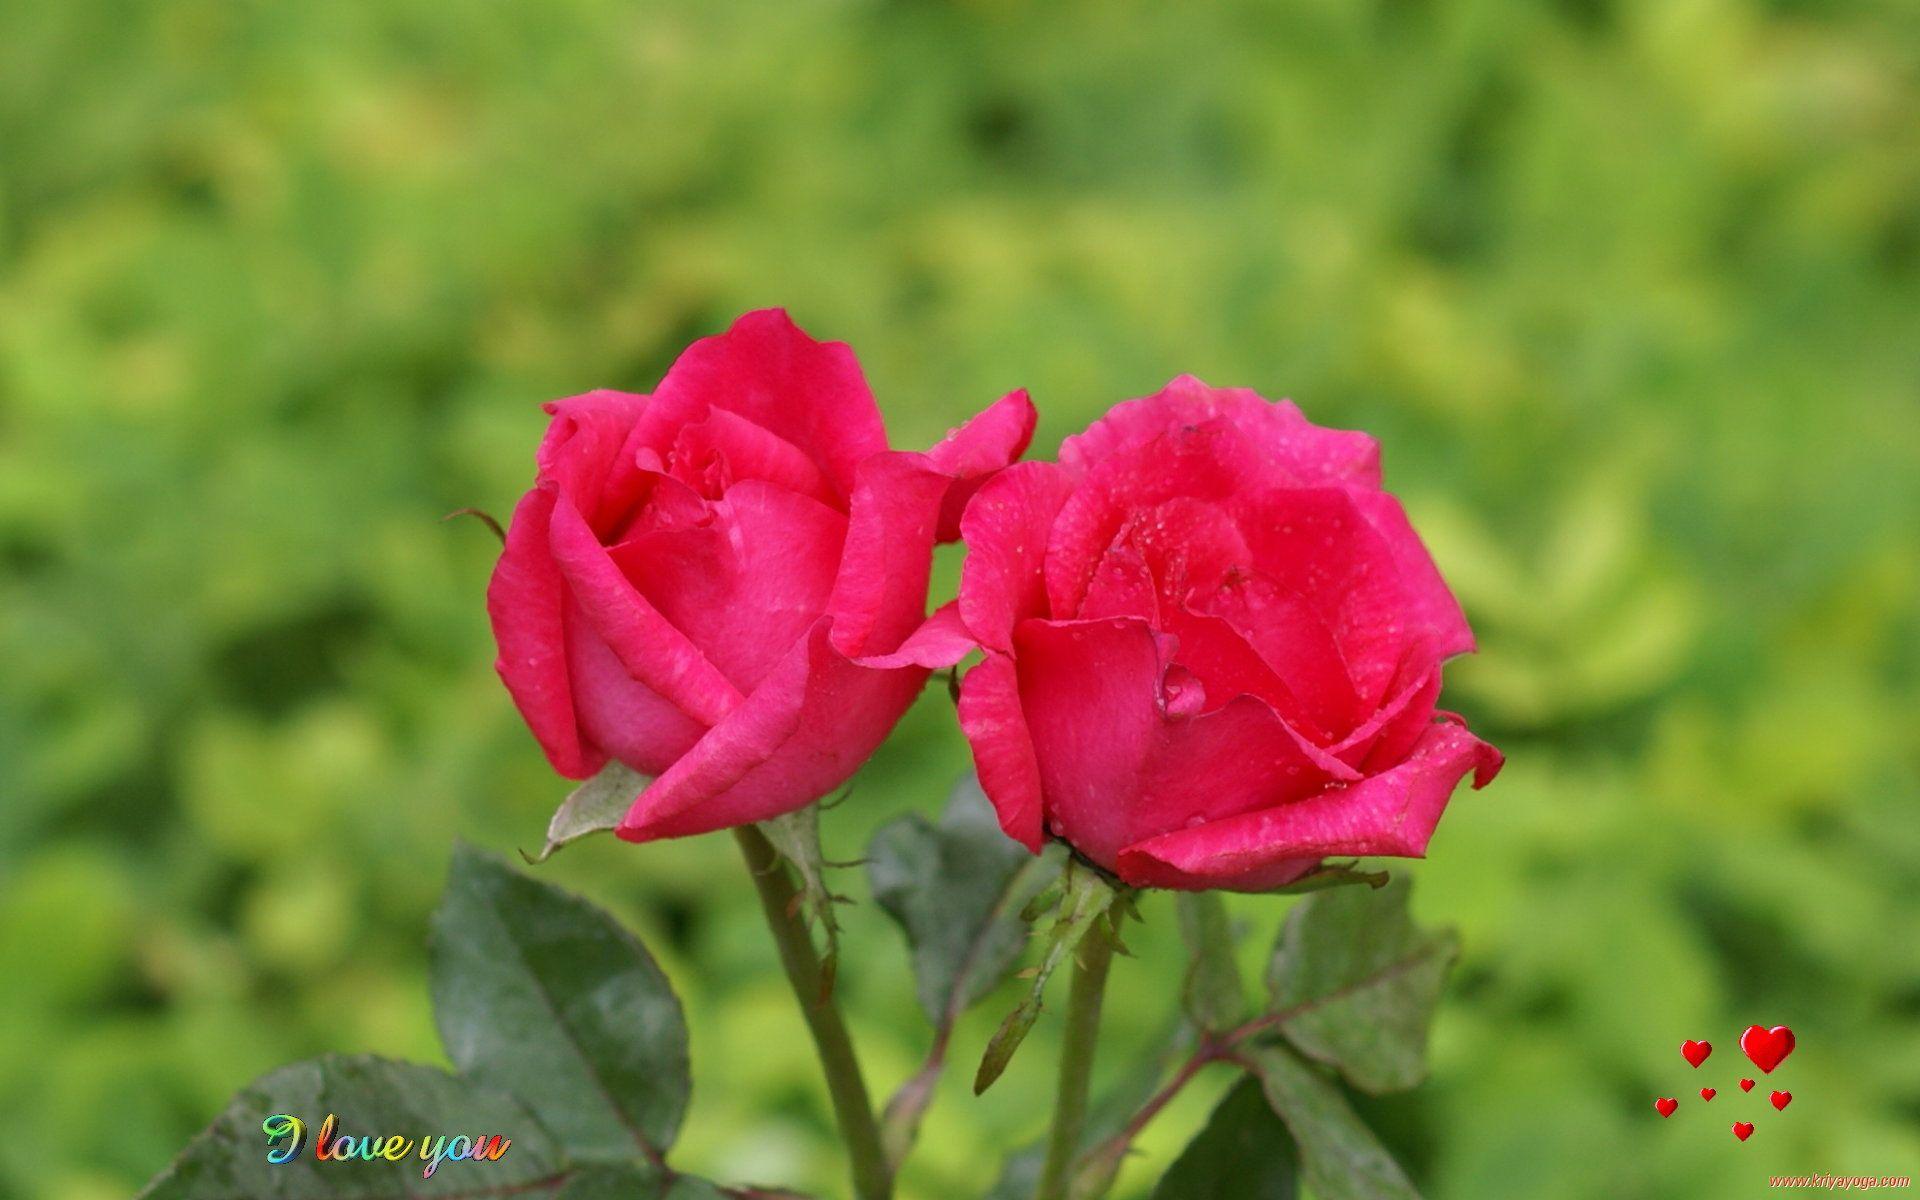 knumathise: Red Rose I Love You Wallpaper Image